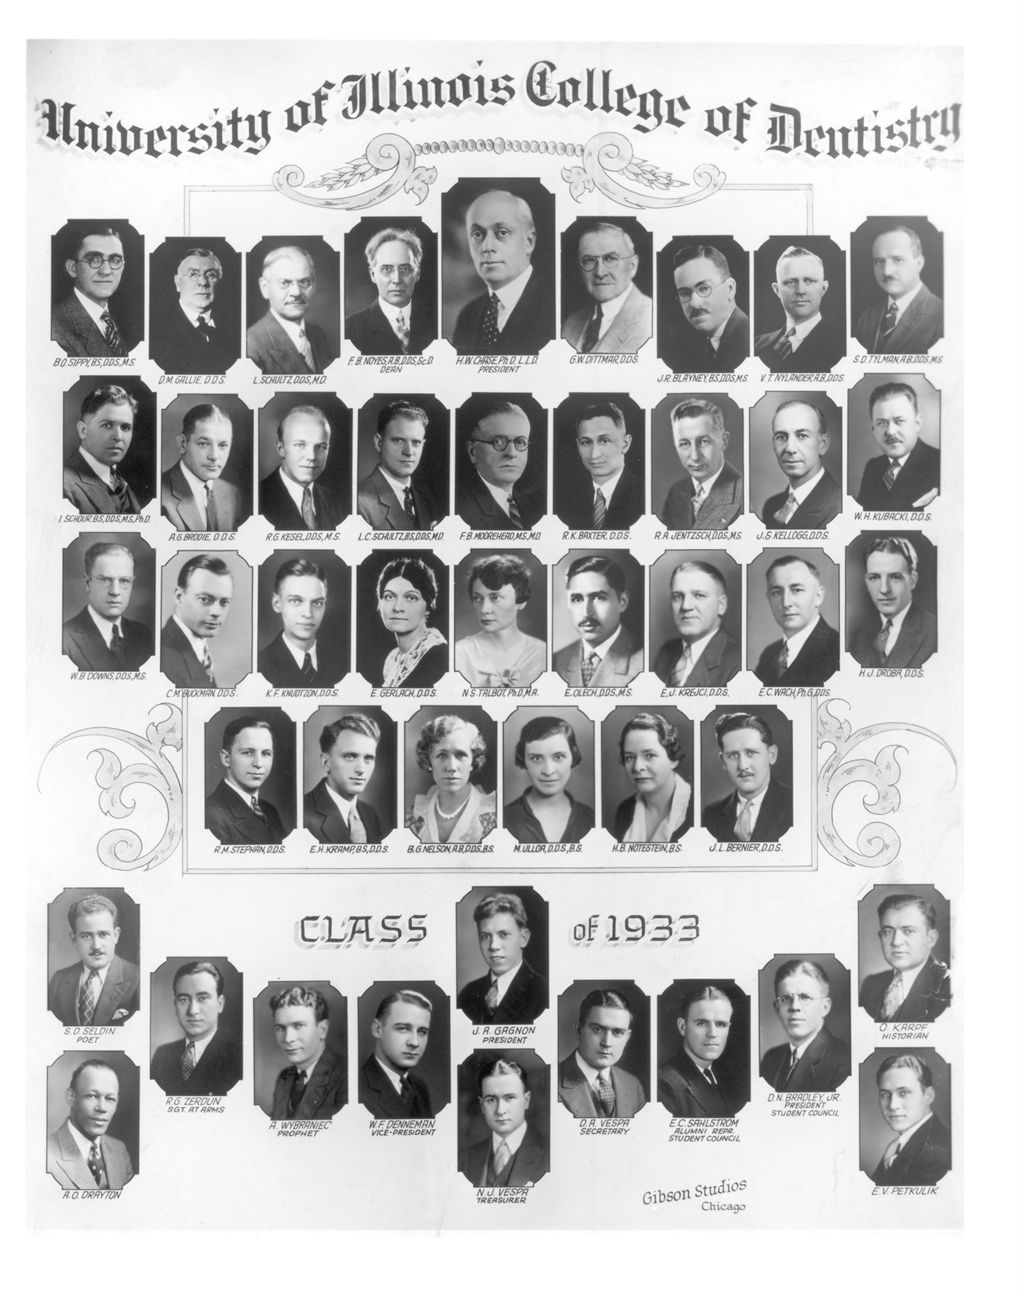 Miniature of 1933 graduating class, University of Illinois College of Dentistry